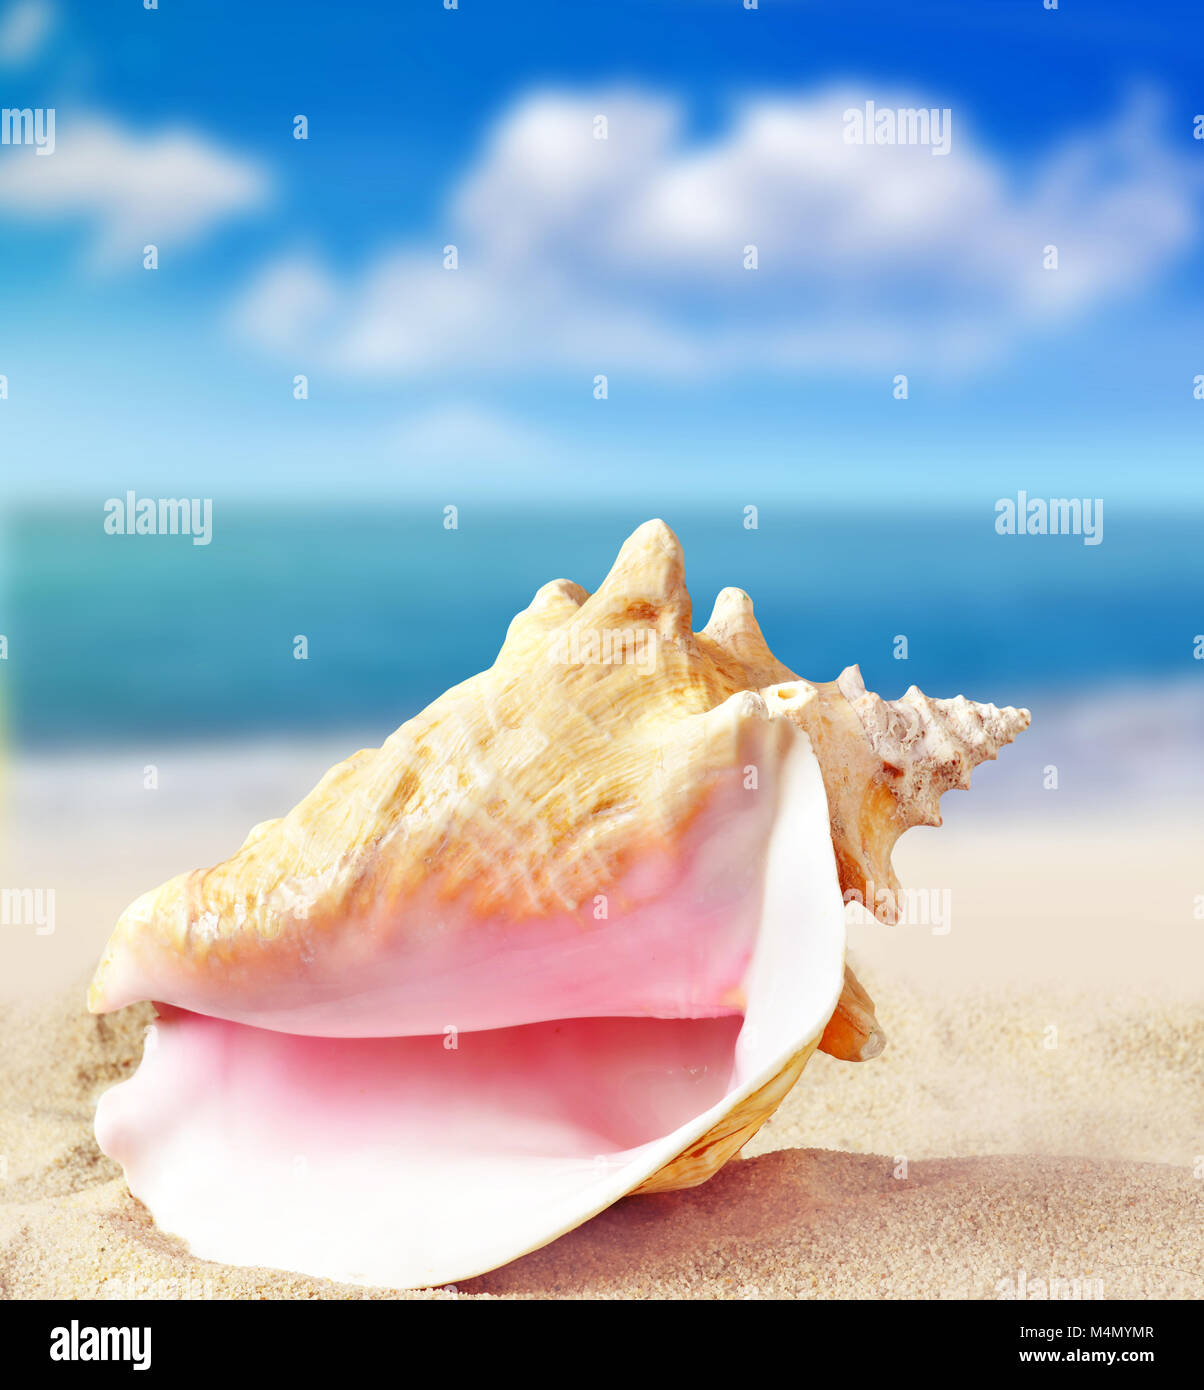 Seashell on the sand beach. Summer concept. Stock Photo